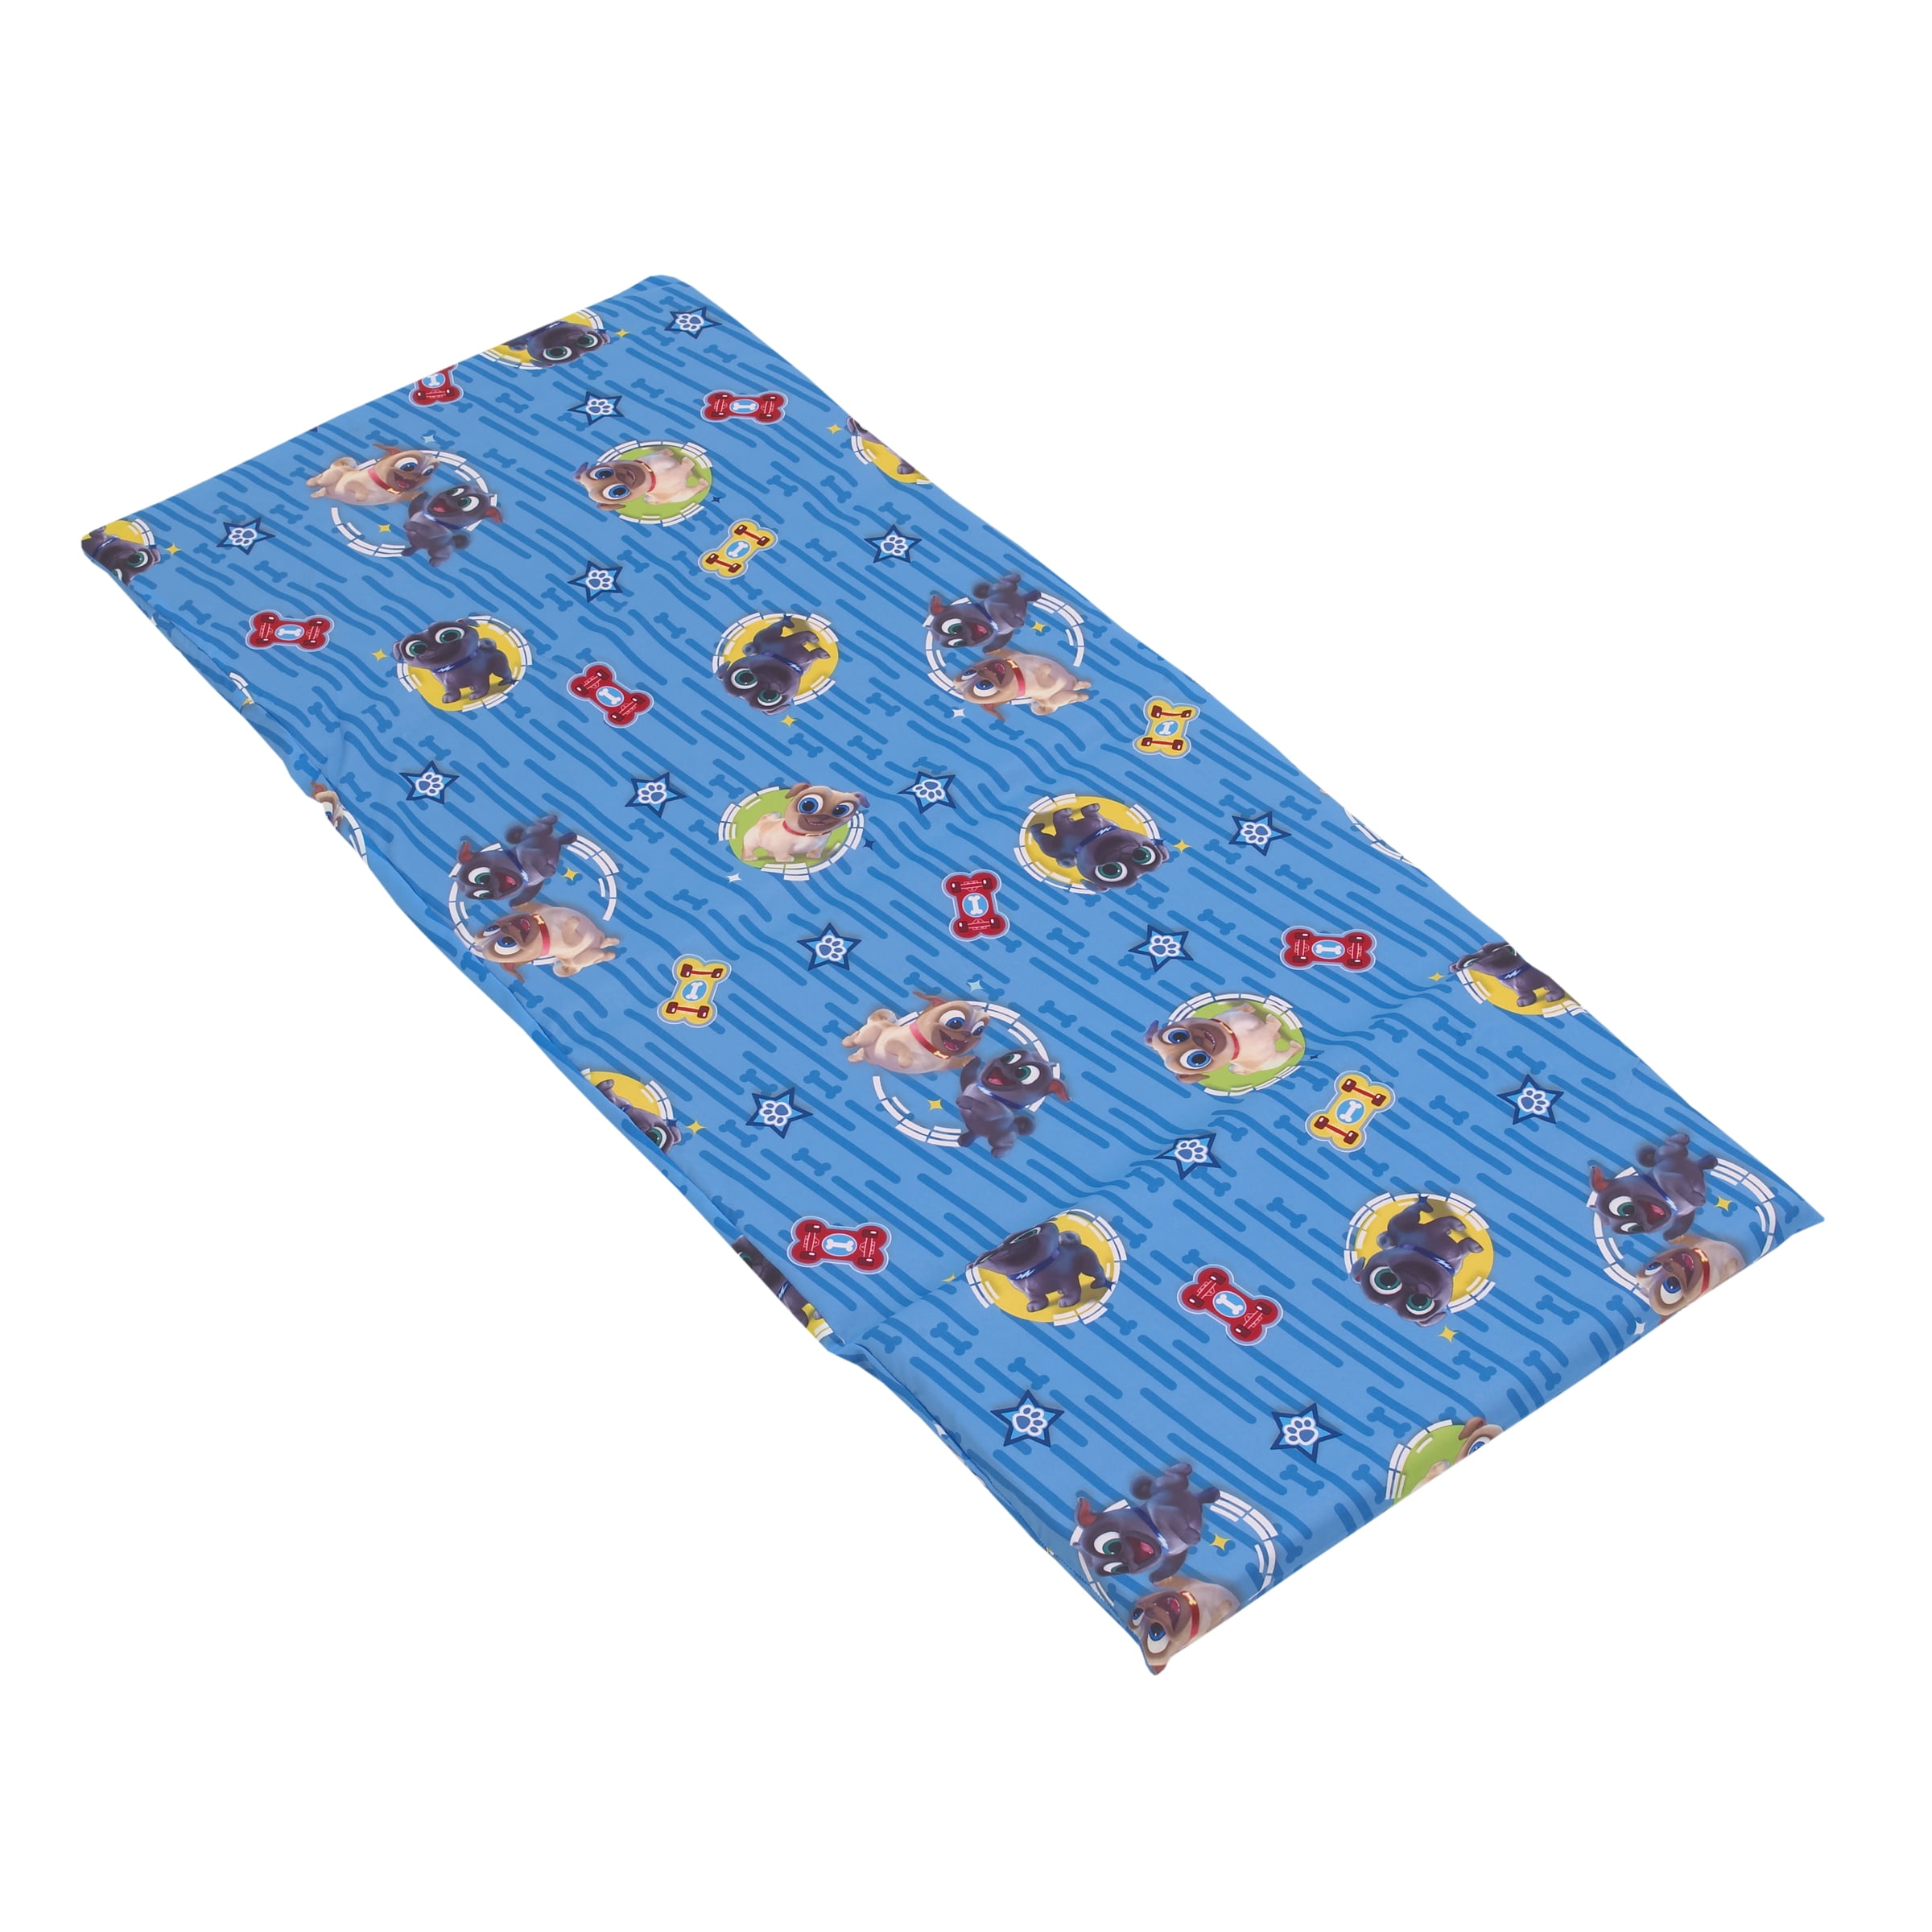 Disney Puppy Dog Pals Blue, Grey Toddler Nap Pad Sheet, Size 44 x 19 ...